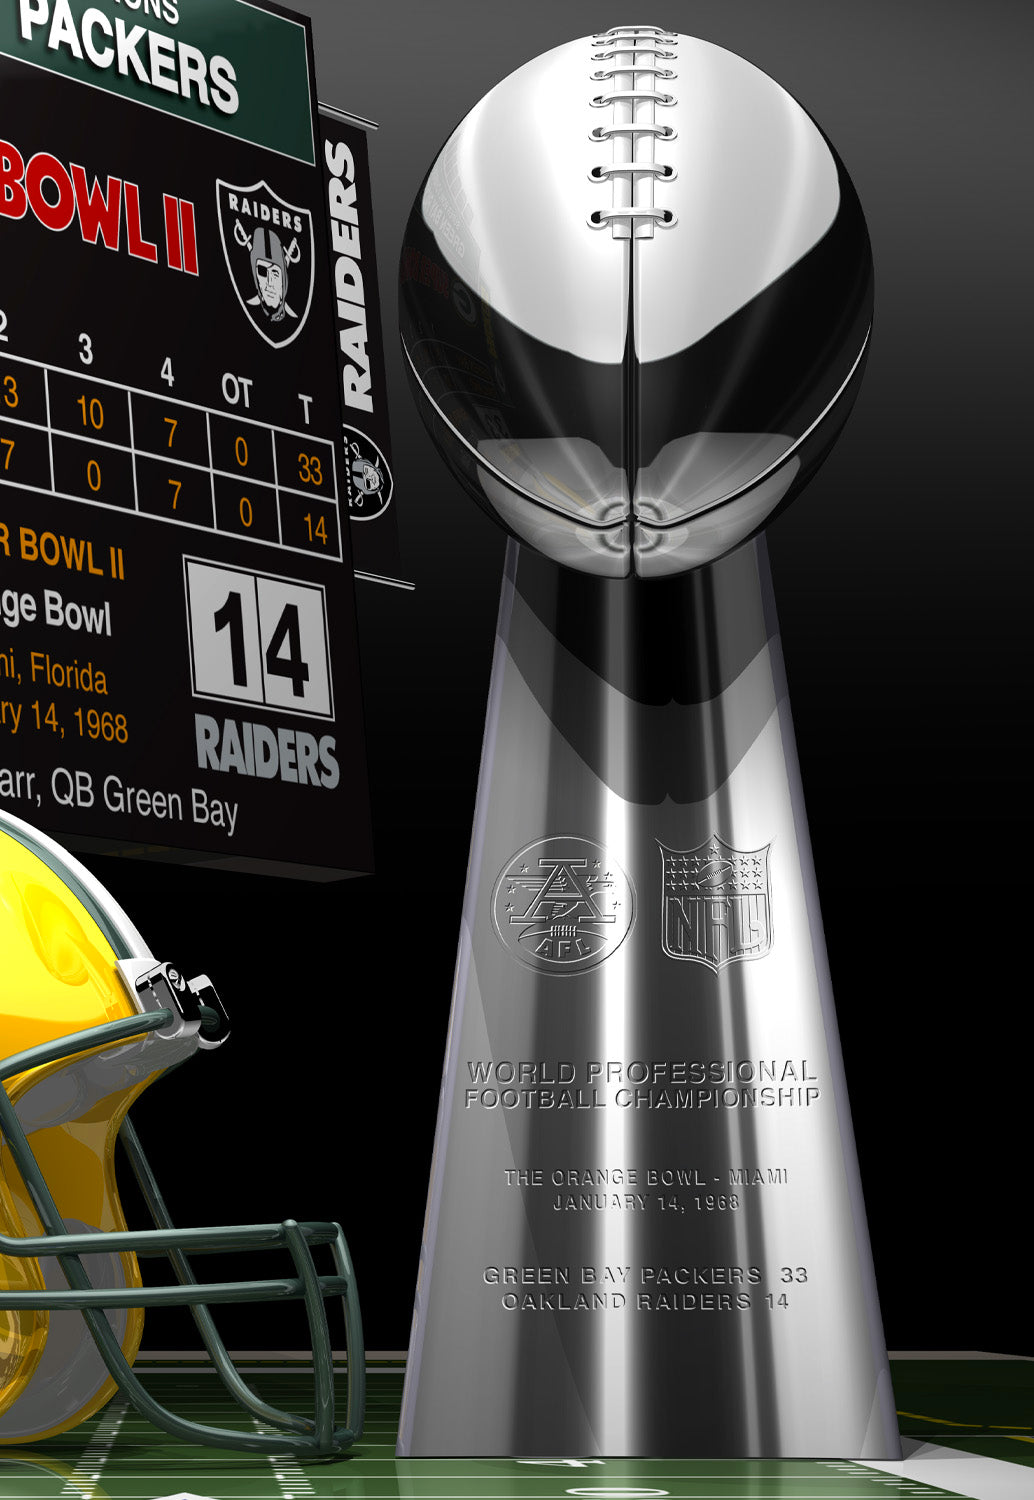 Green Bay Packers, Super Bowl II Champions